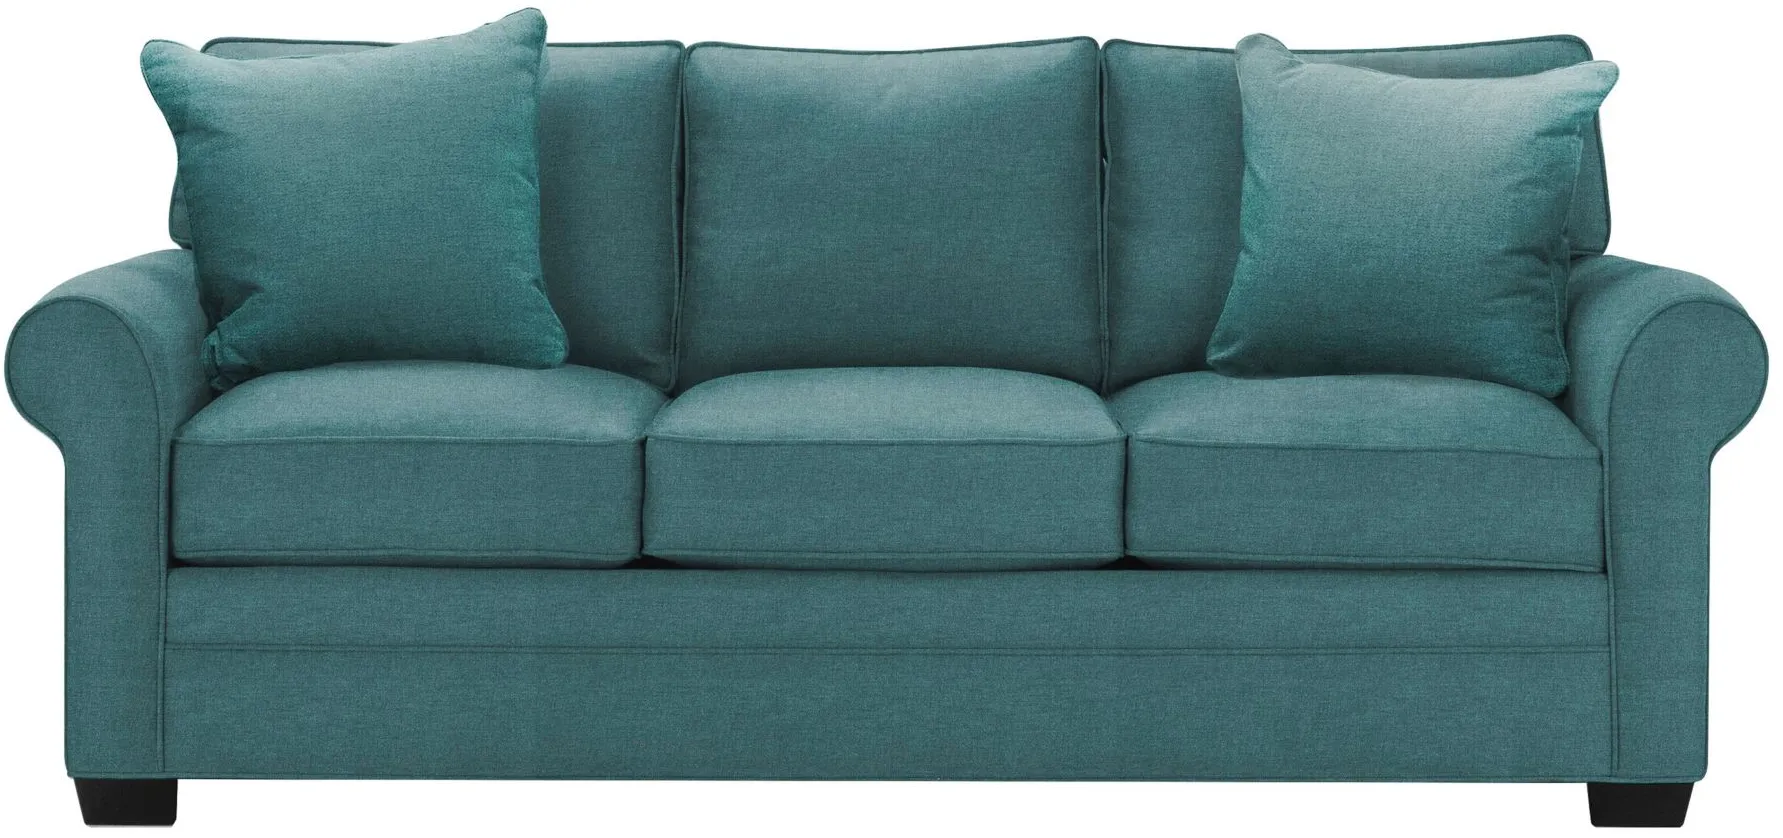 Glendora Queen Sleeper Sofa in Santa Rosa Turquoise by H.M. Richards